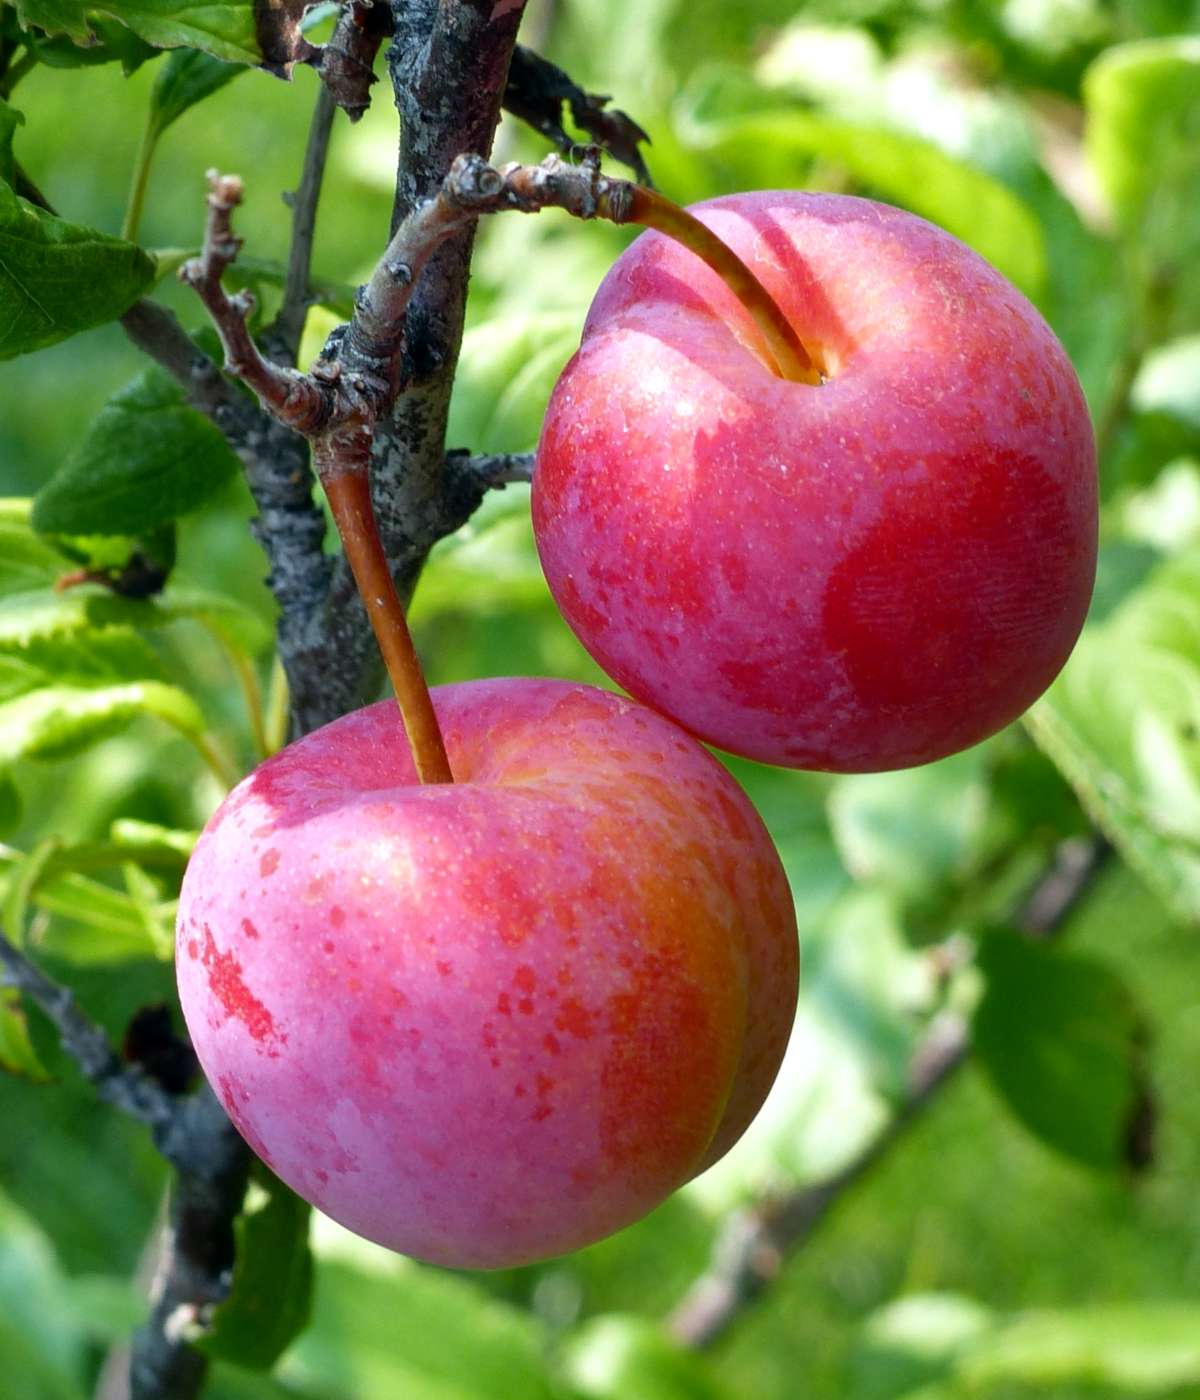 Do plum trees produce fruit every year